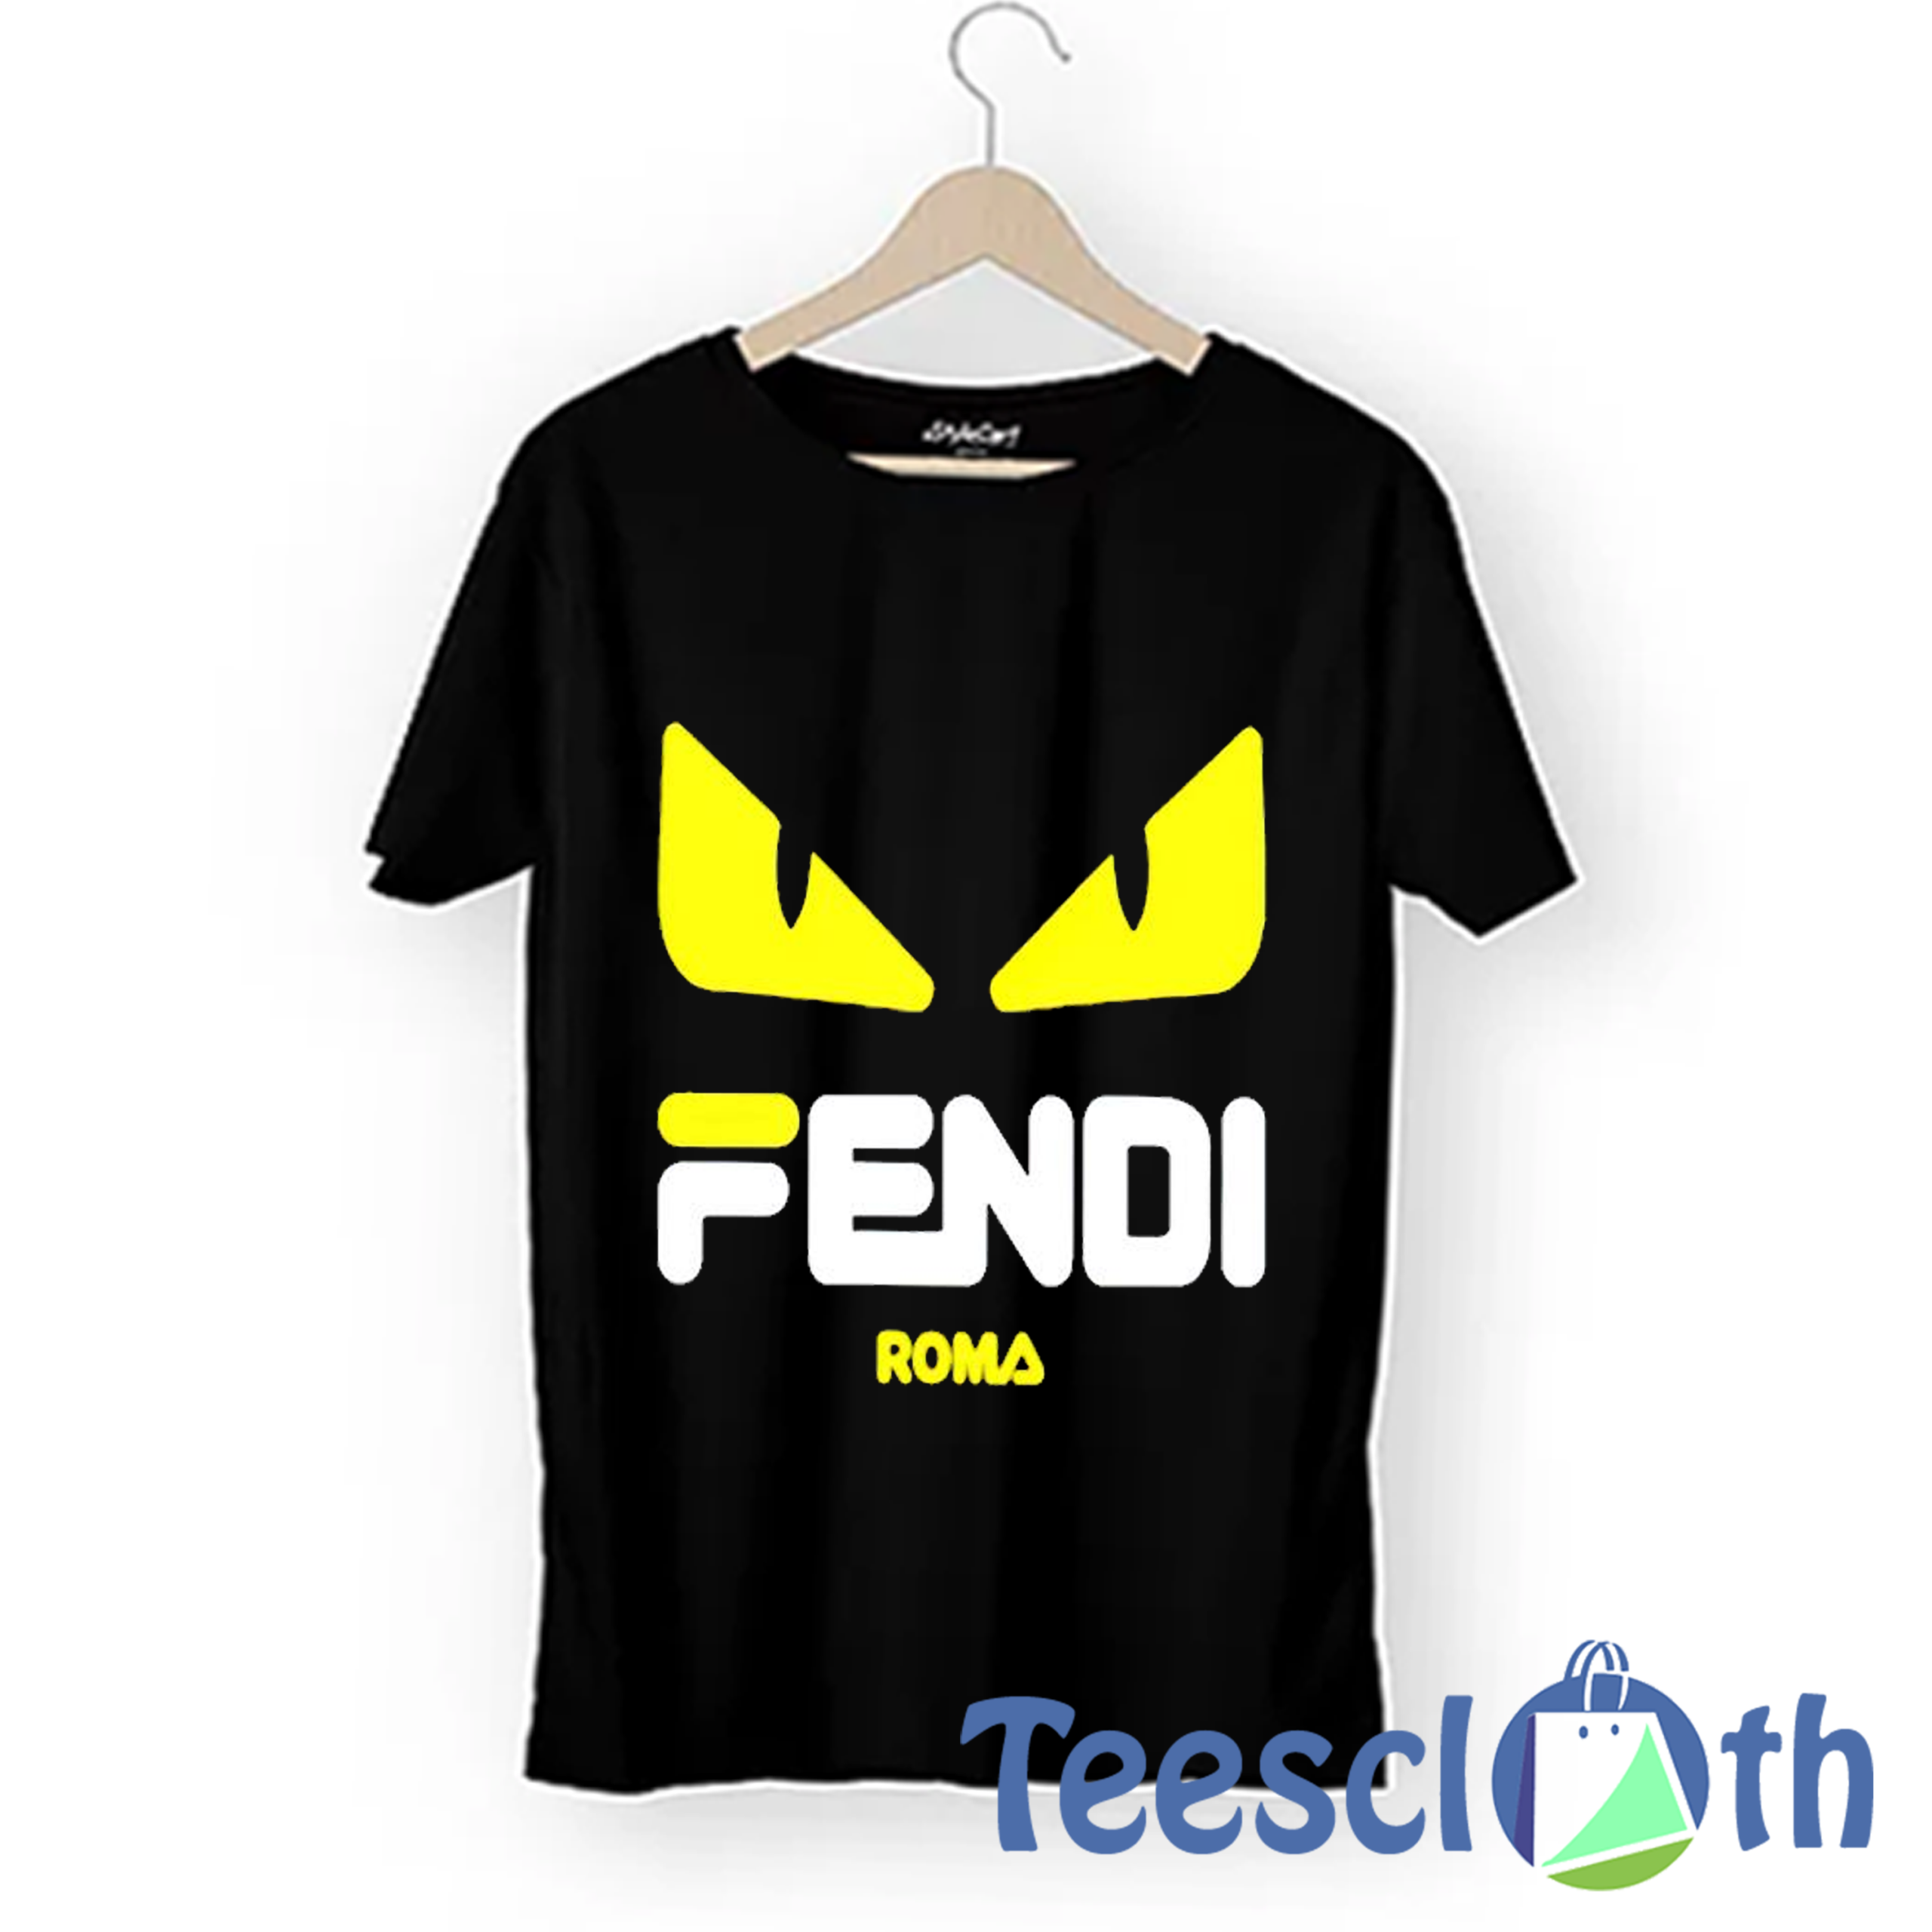 Fendi Romaaa T Shirt For Men Women And Youth